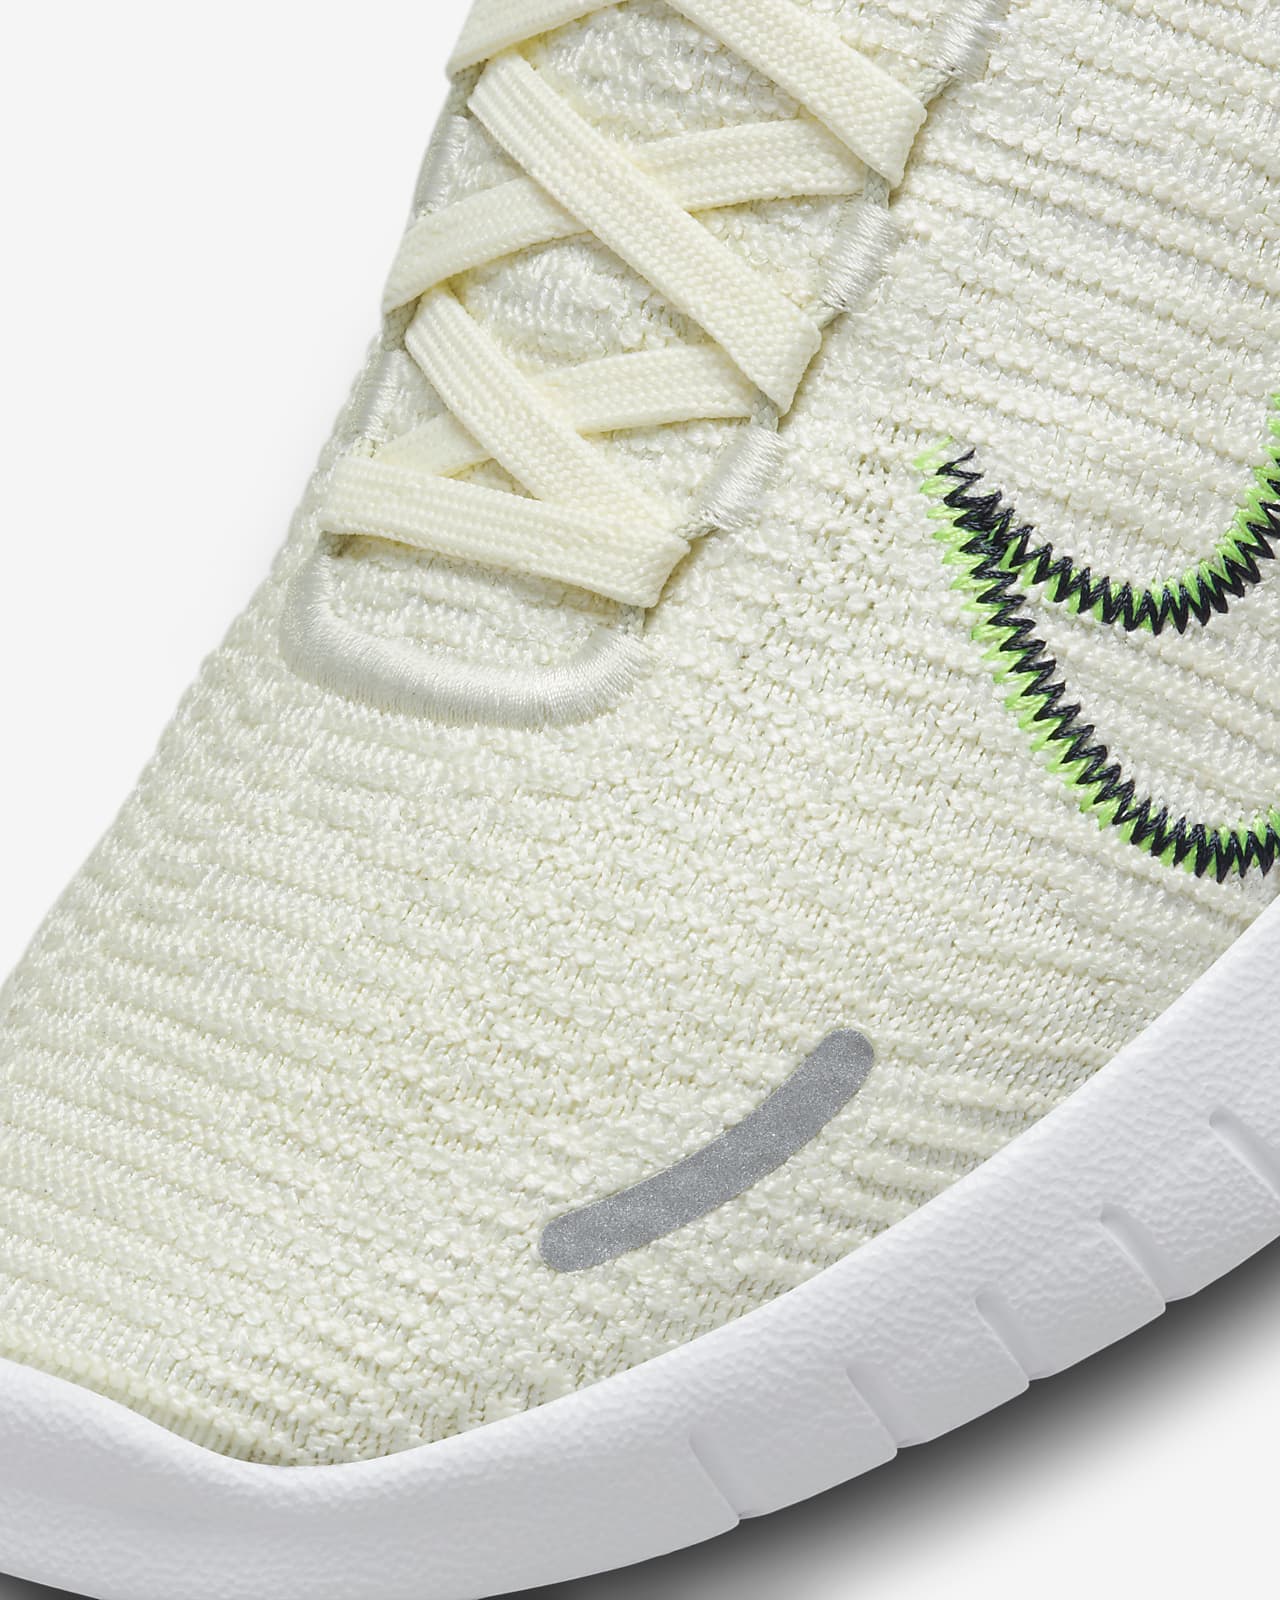 Nike Free Flyknit Running Shoe Is Like a Sock [Photos]